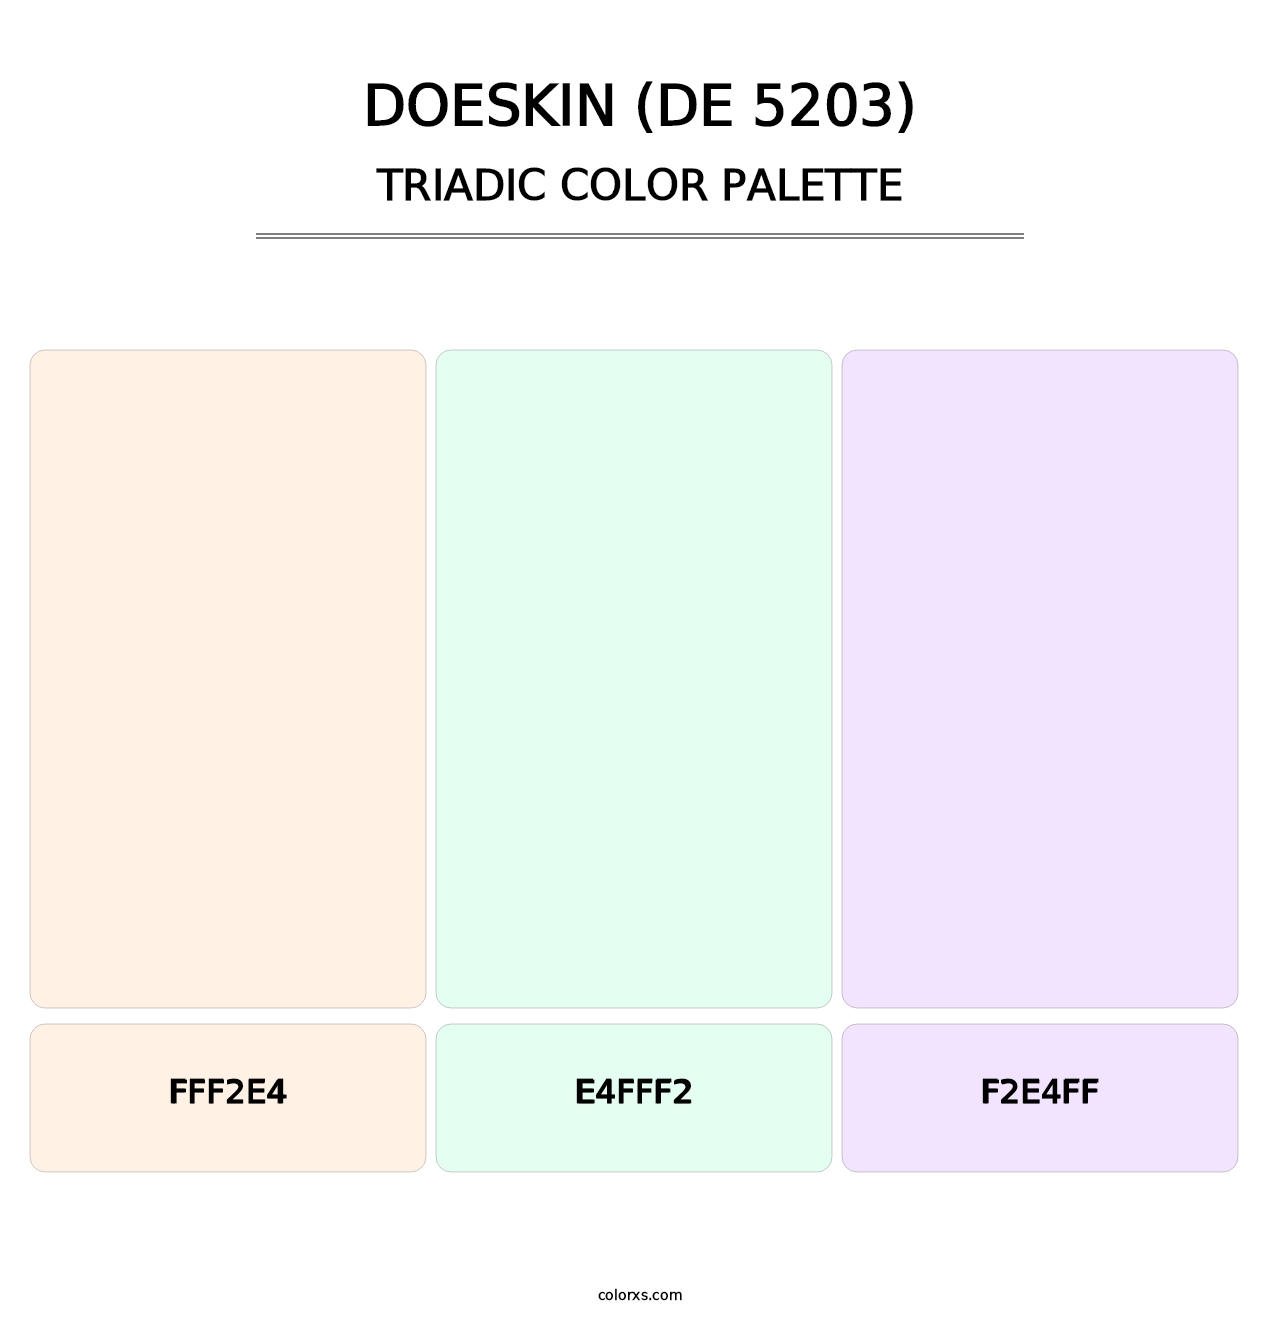 Doeskin (DE 5203) - Triadic Color Palette